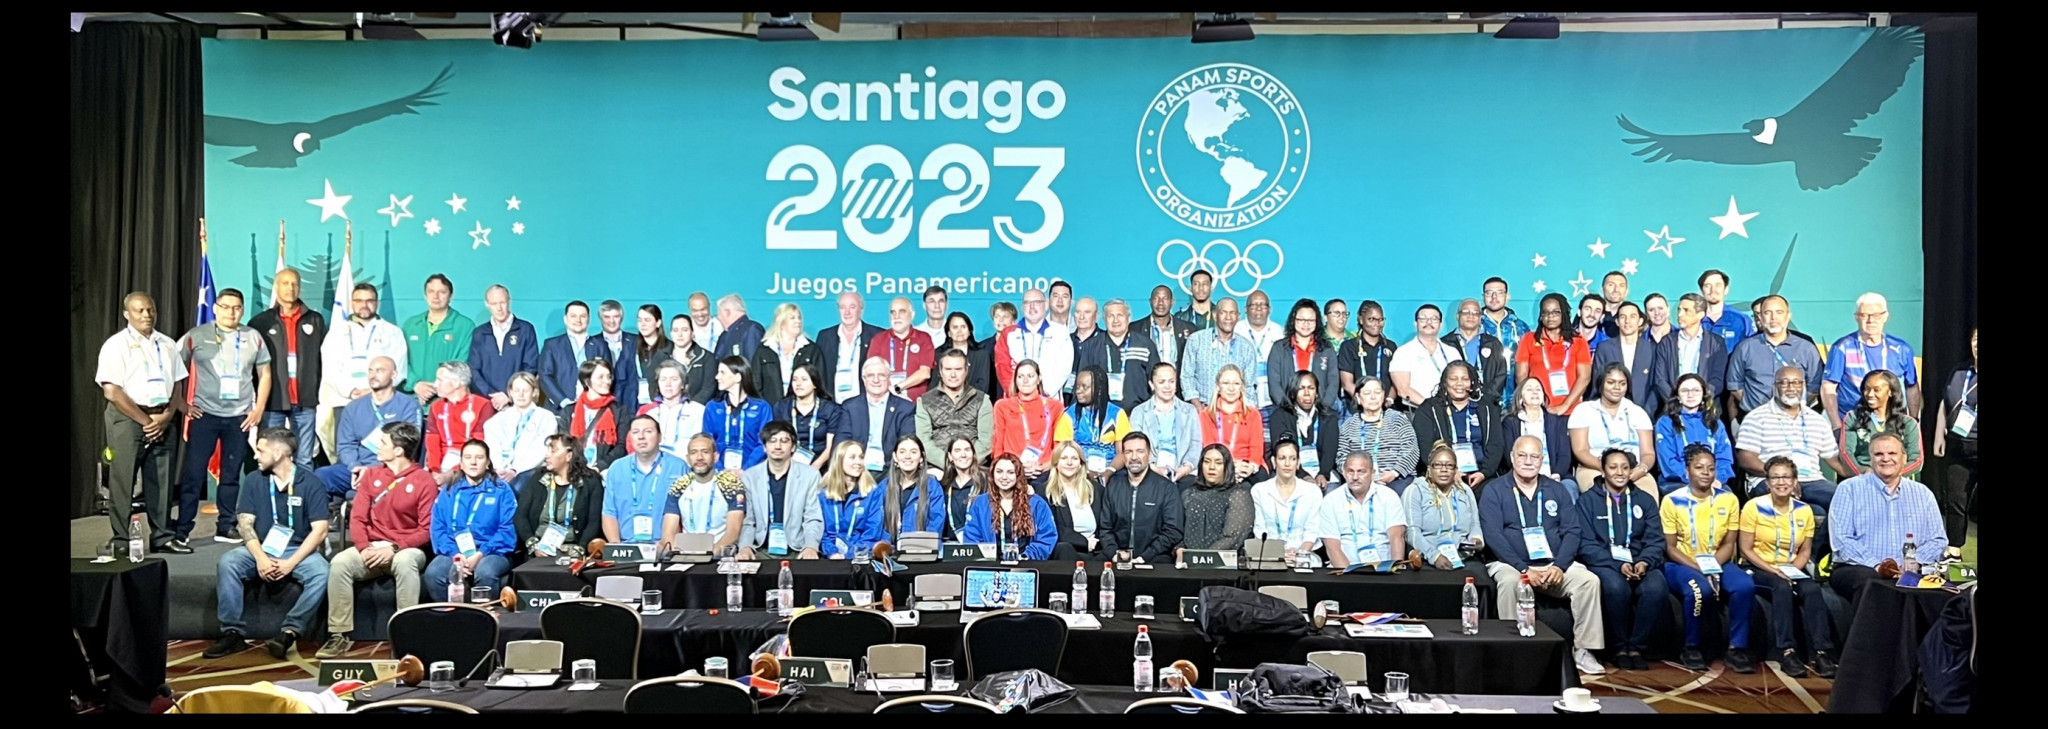 Santiago hosts Chefs de Mission seminar in preparation for Pan American Games